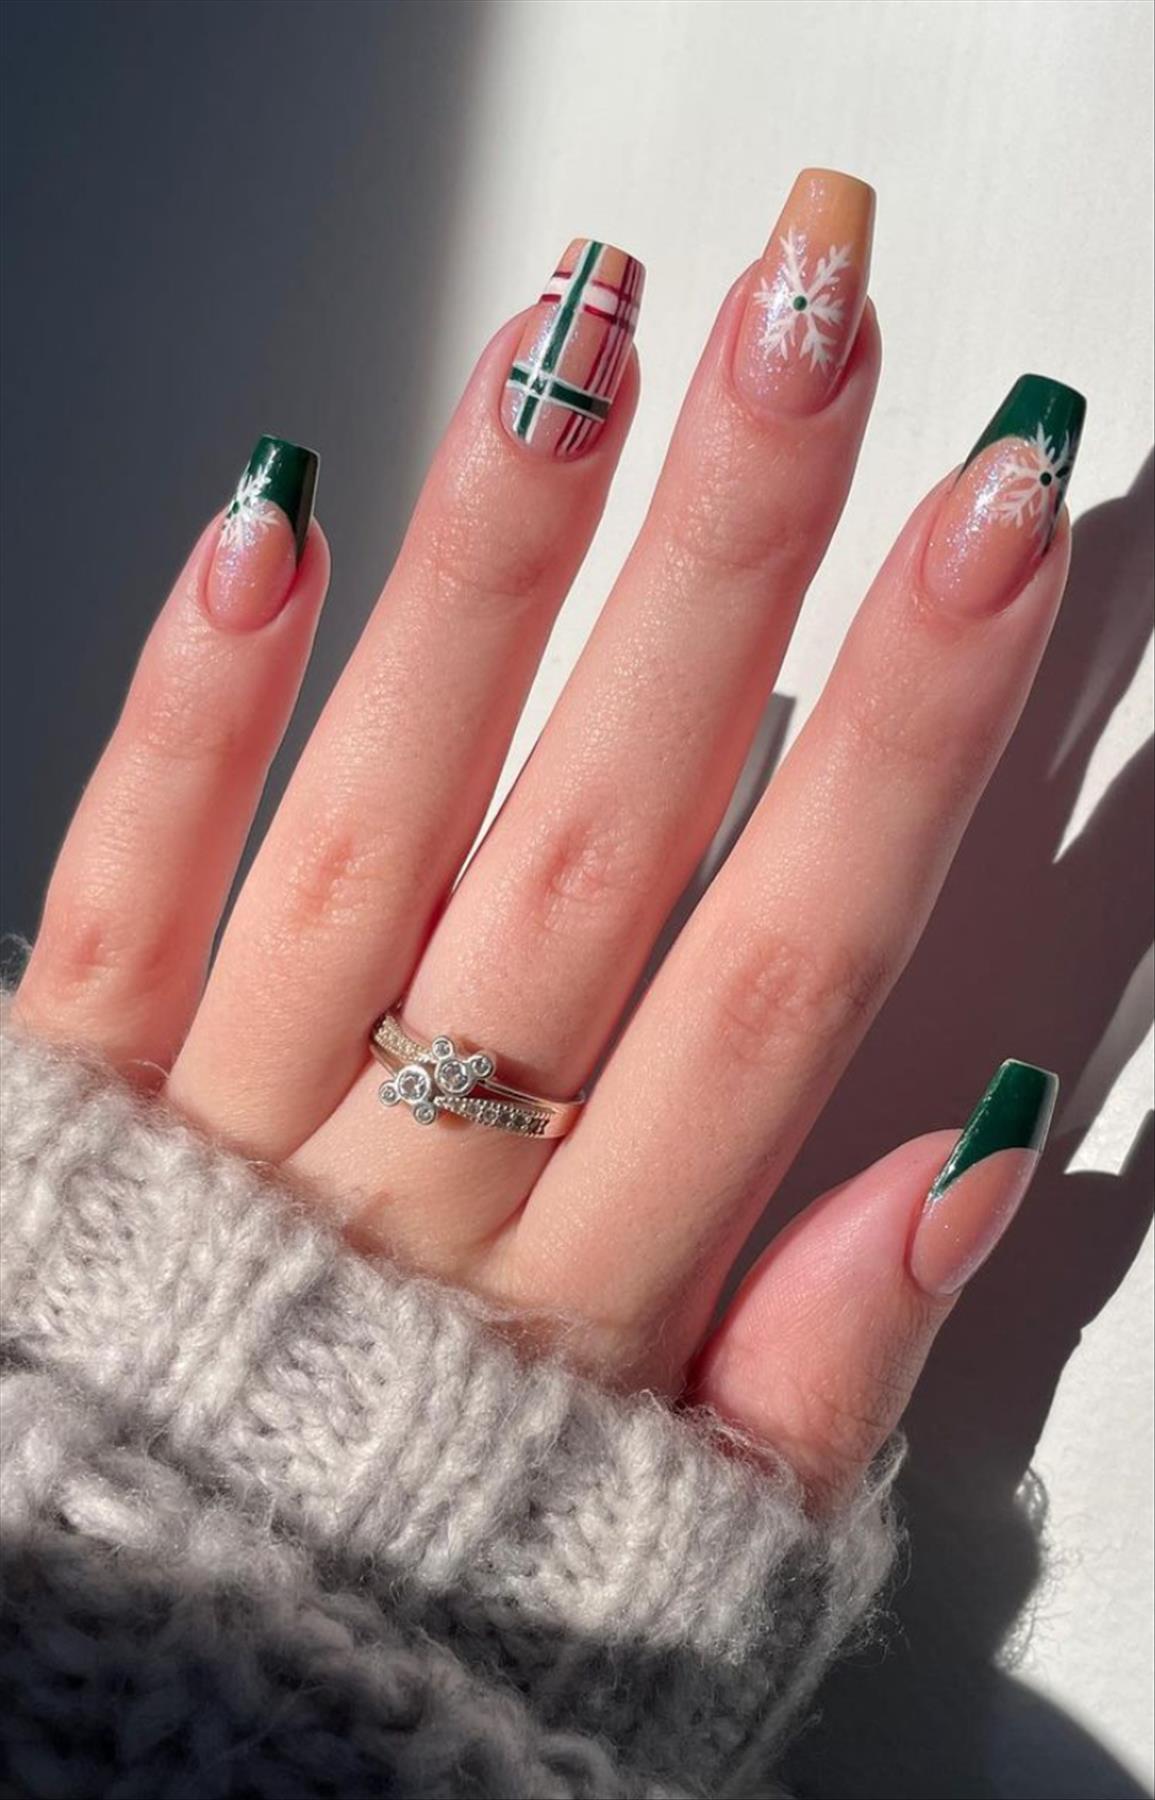 Best Christmas nails design